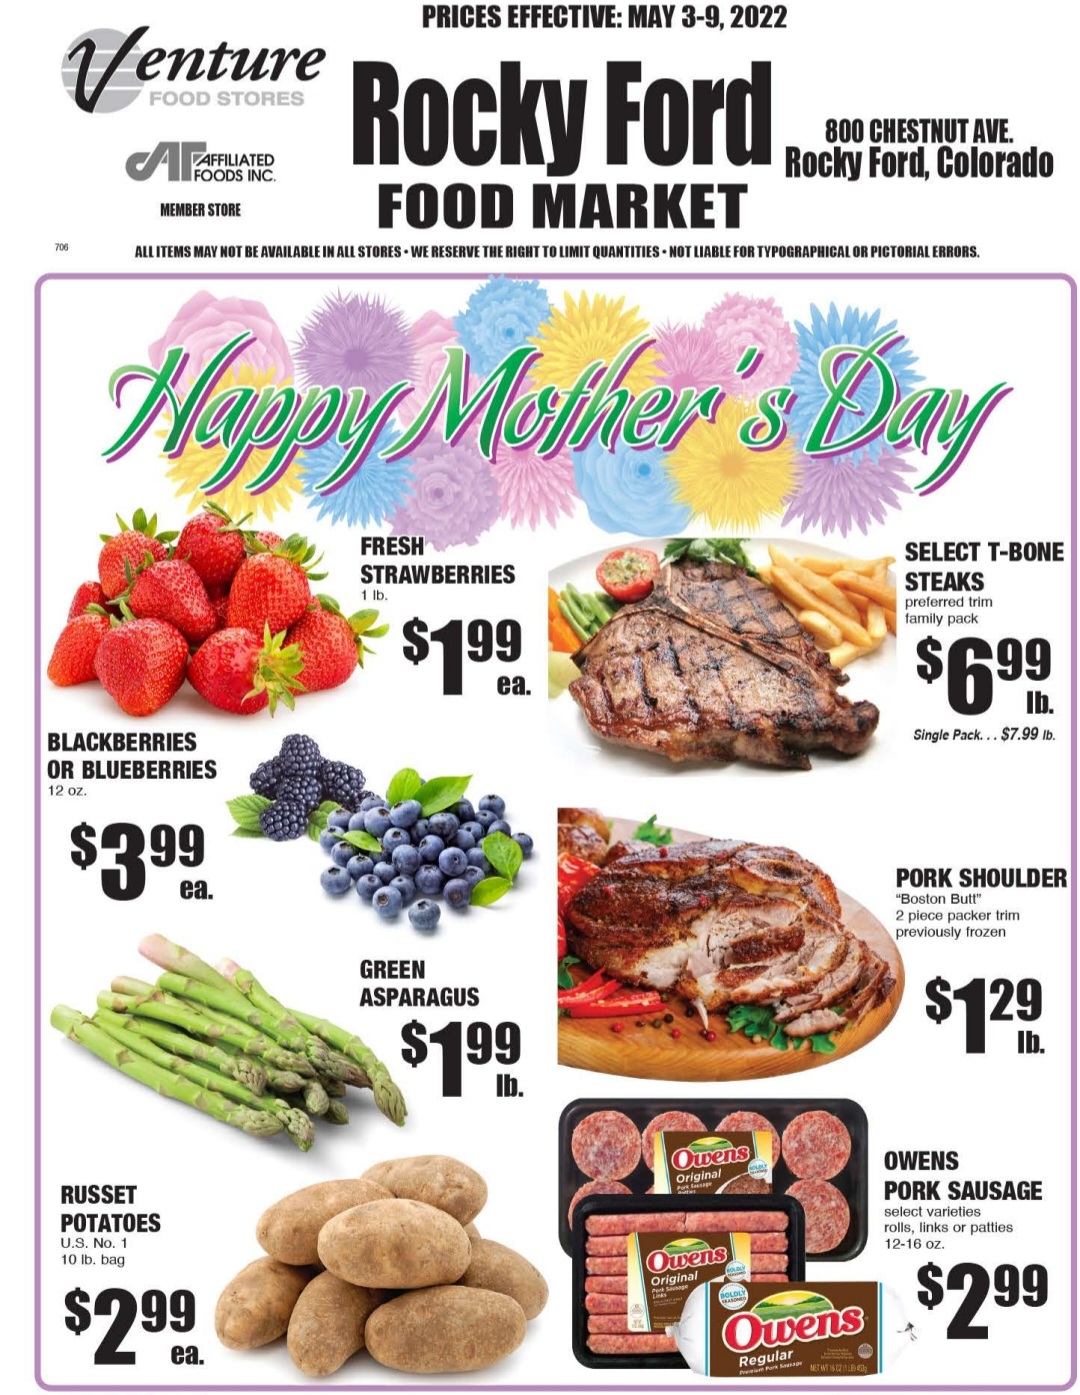 Rocky Ford Food Market Savings May 3-9, 2022